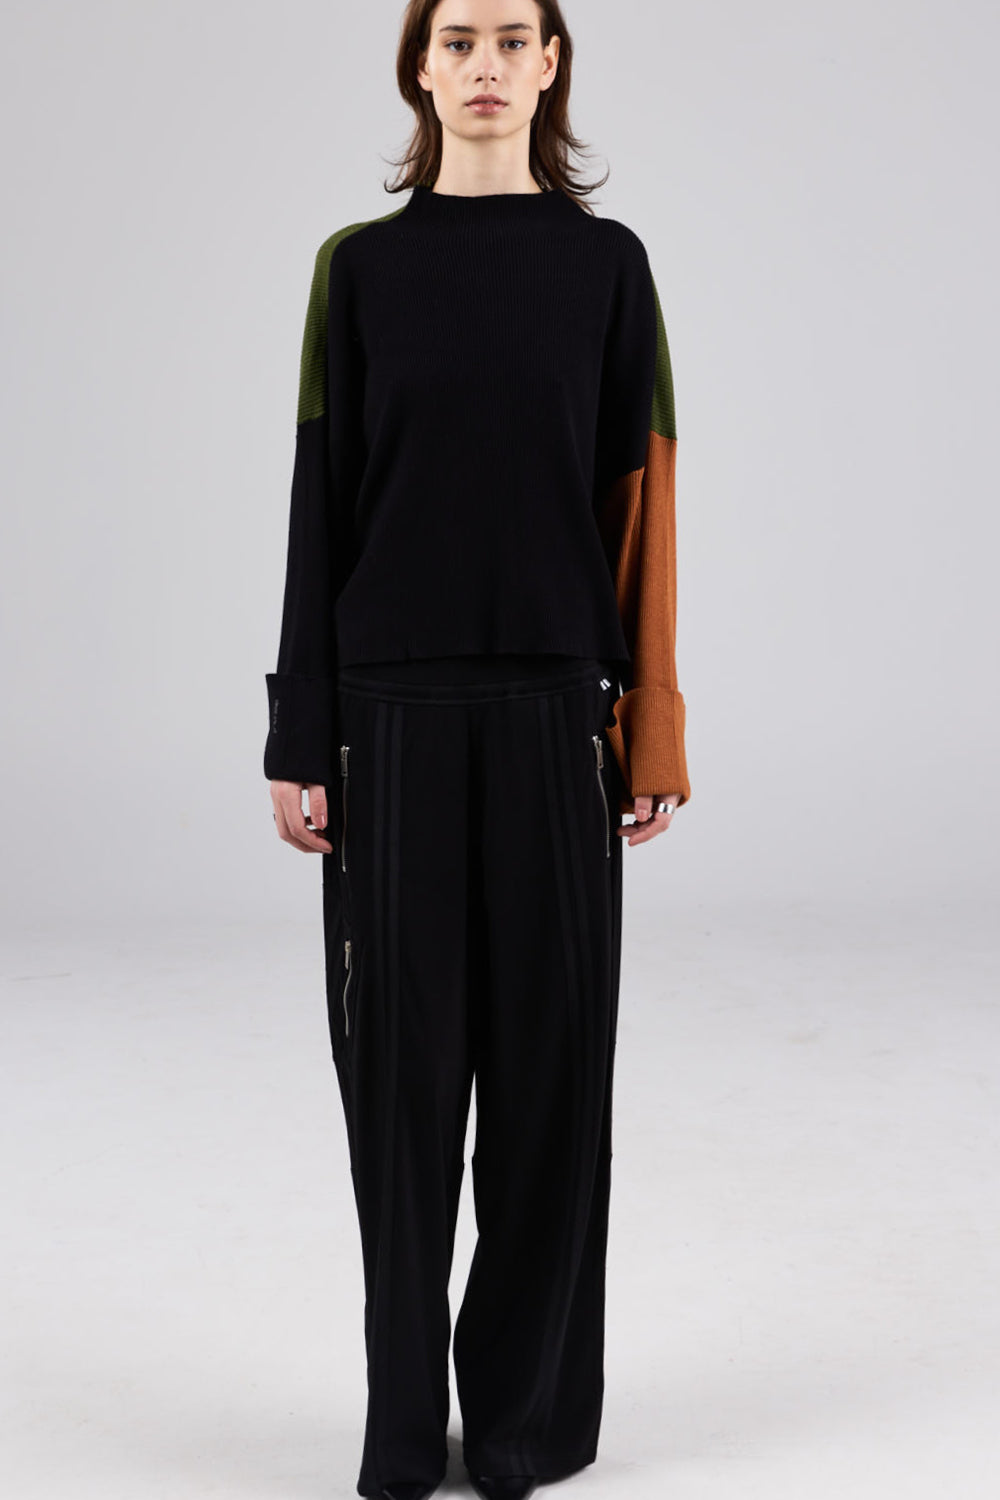 Sample - Ariel Sweater - Black Multi